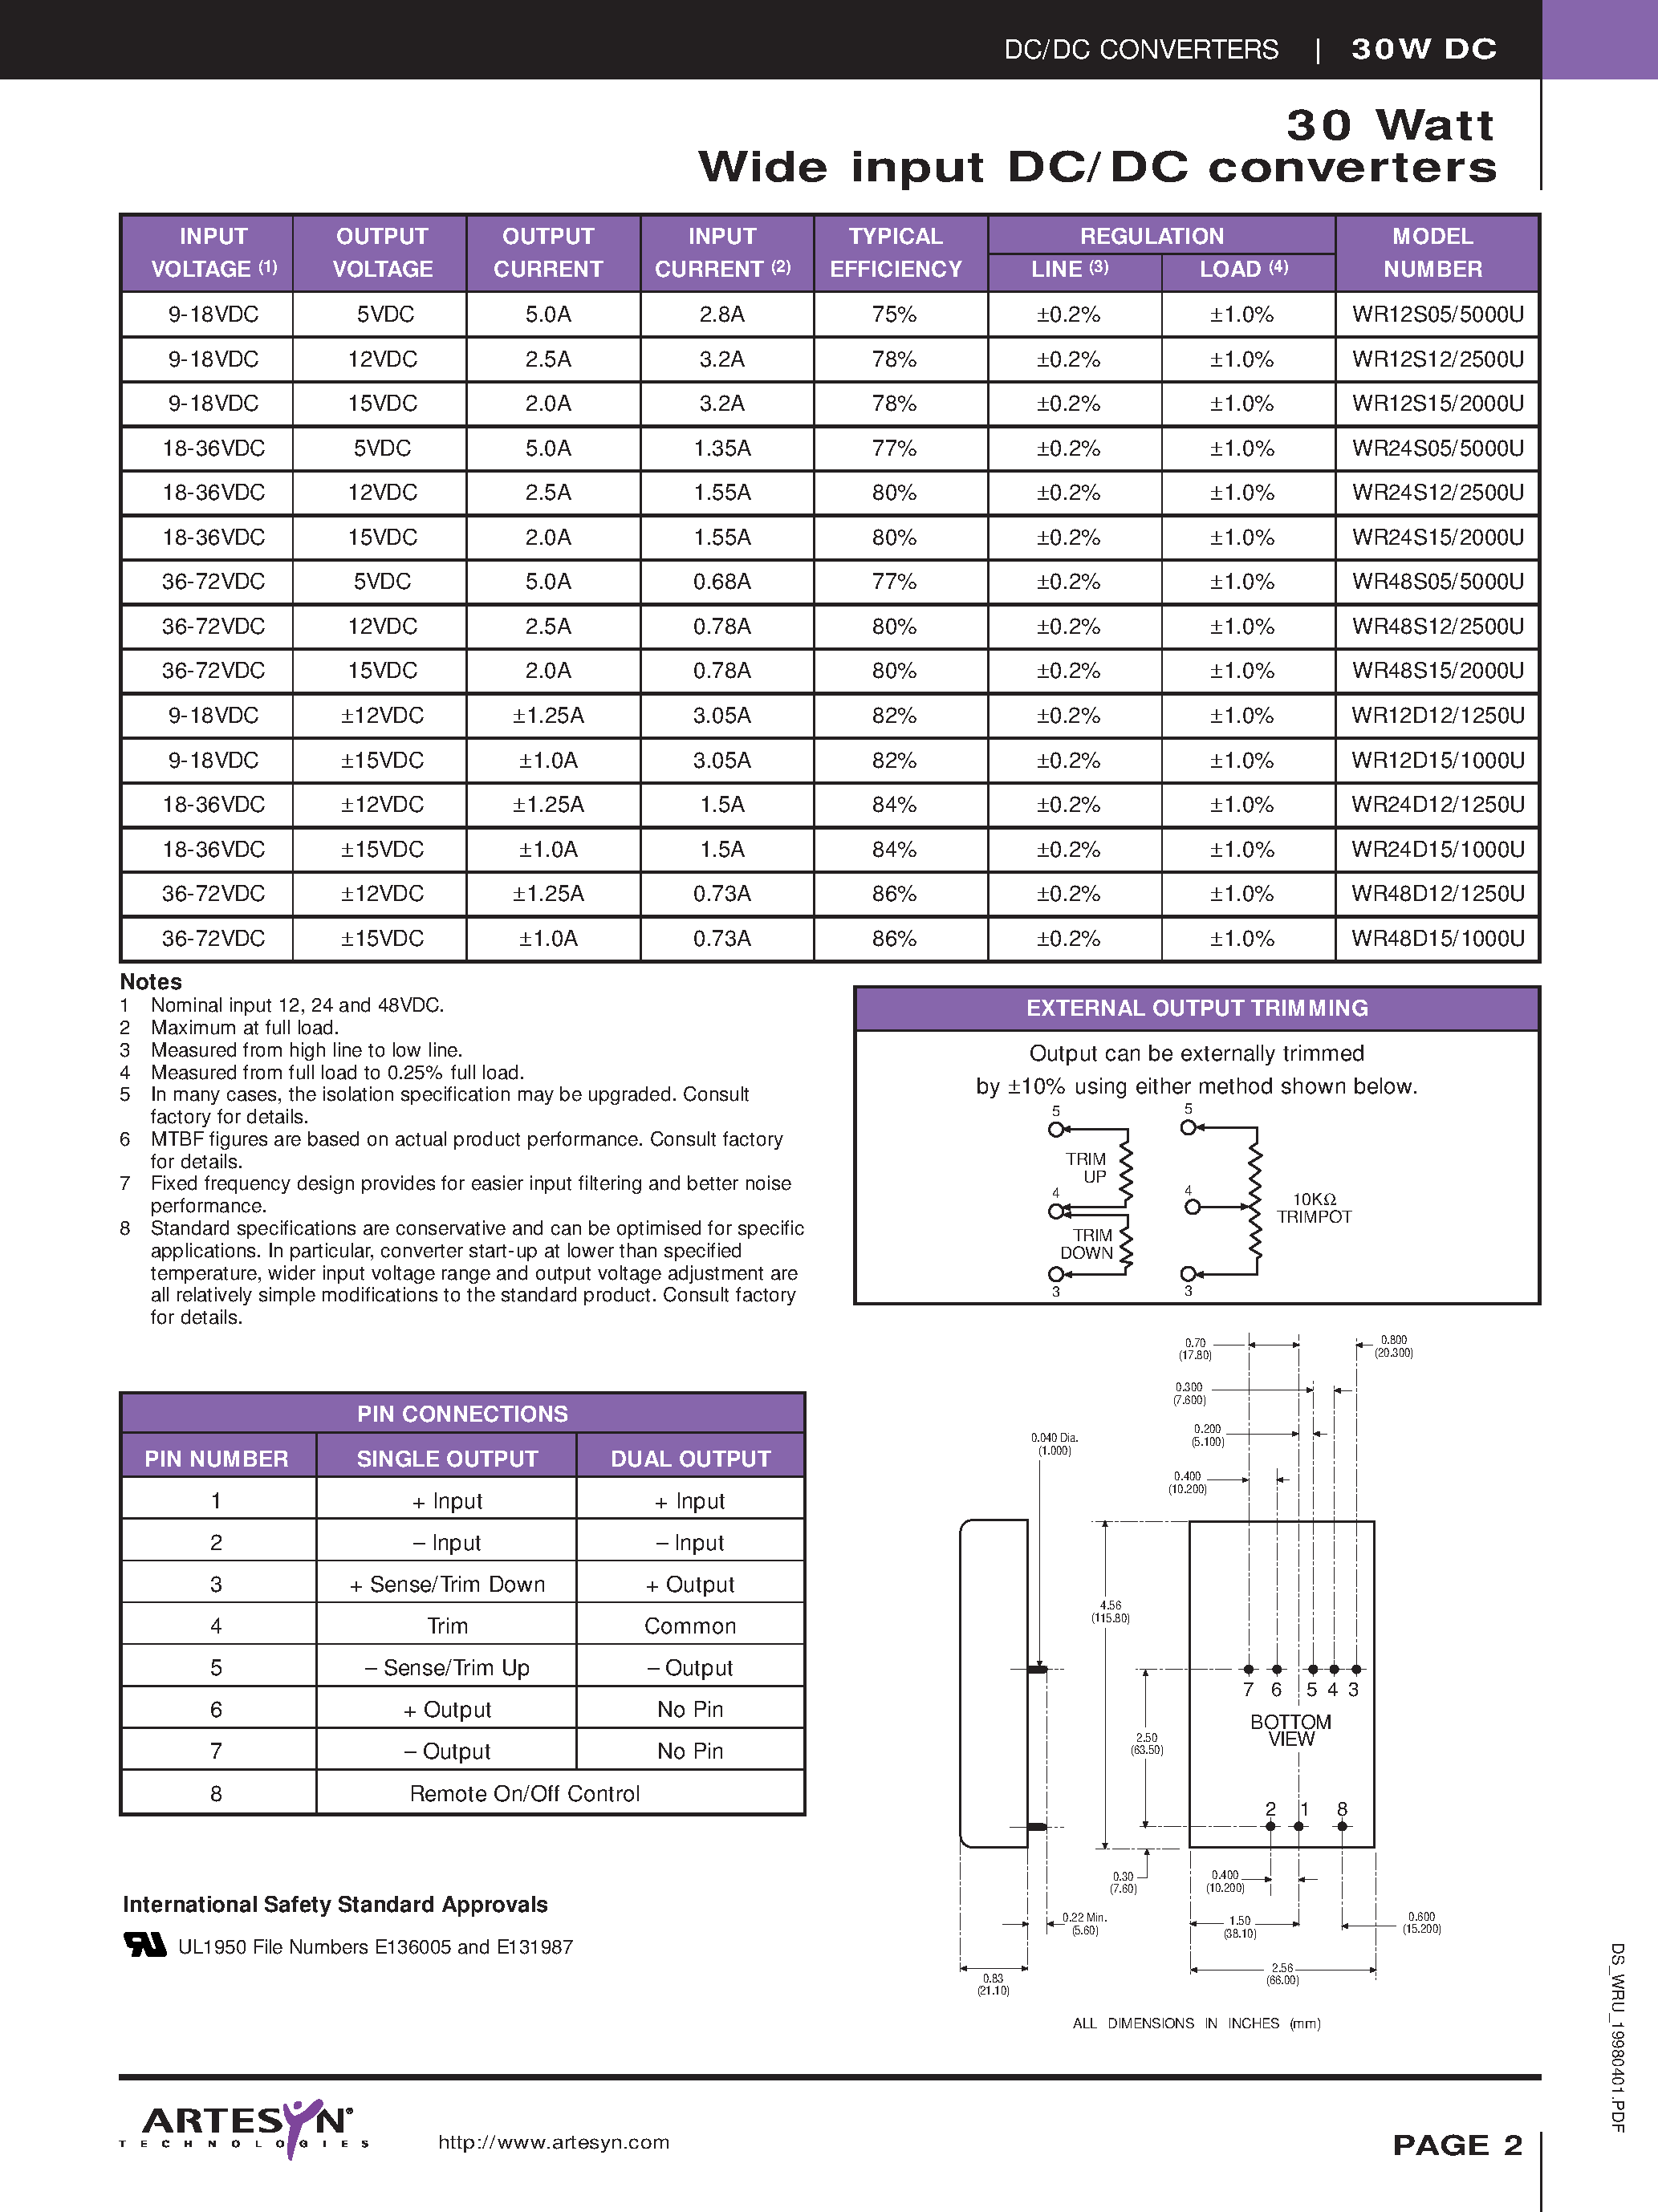 Datasheet WR24D12/1250U - (WR24xxx) WR-U Series / Single and Dual Output page 2